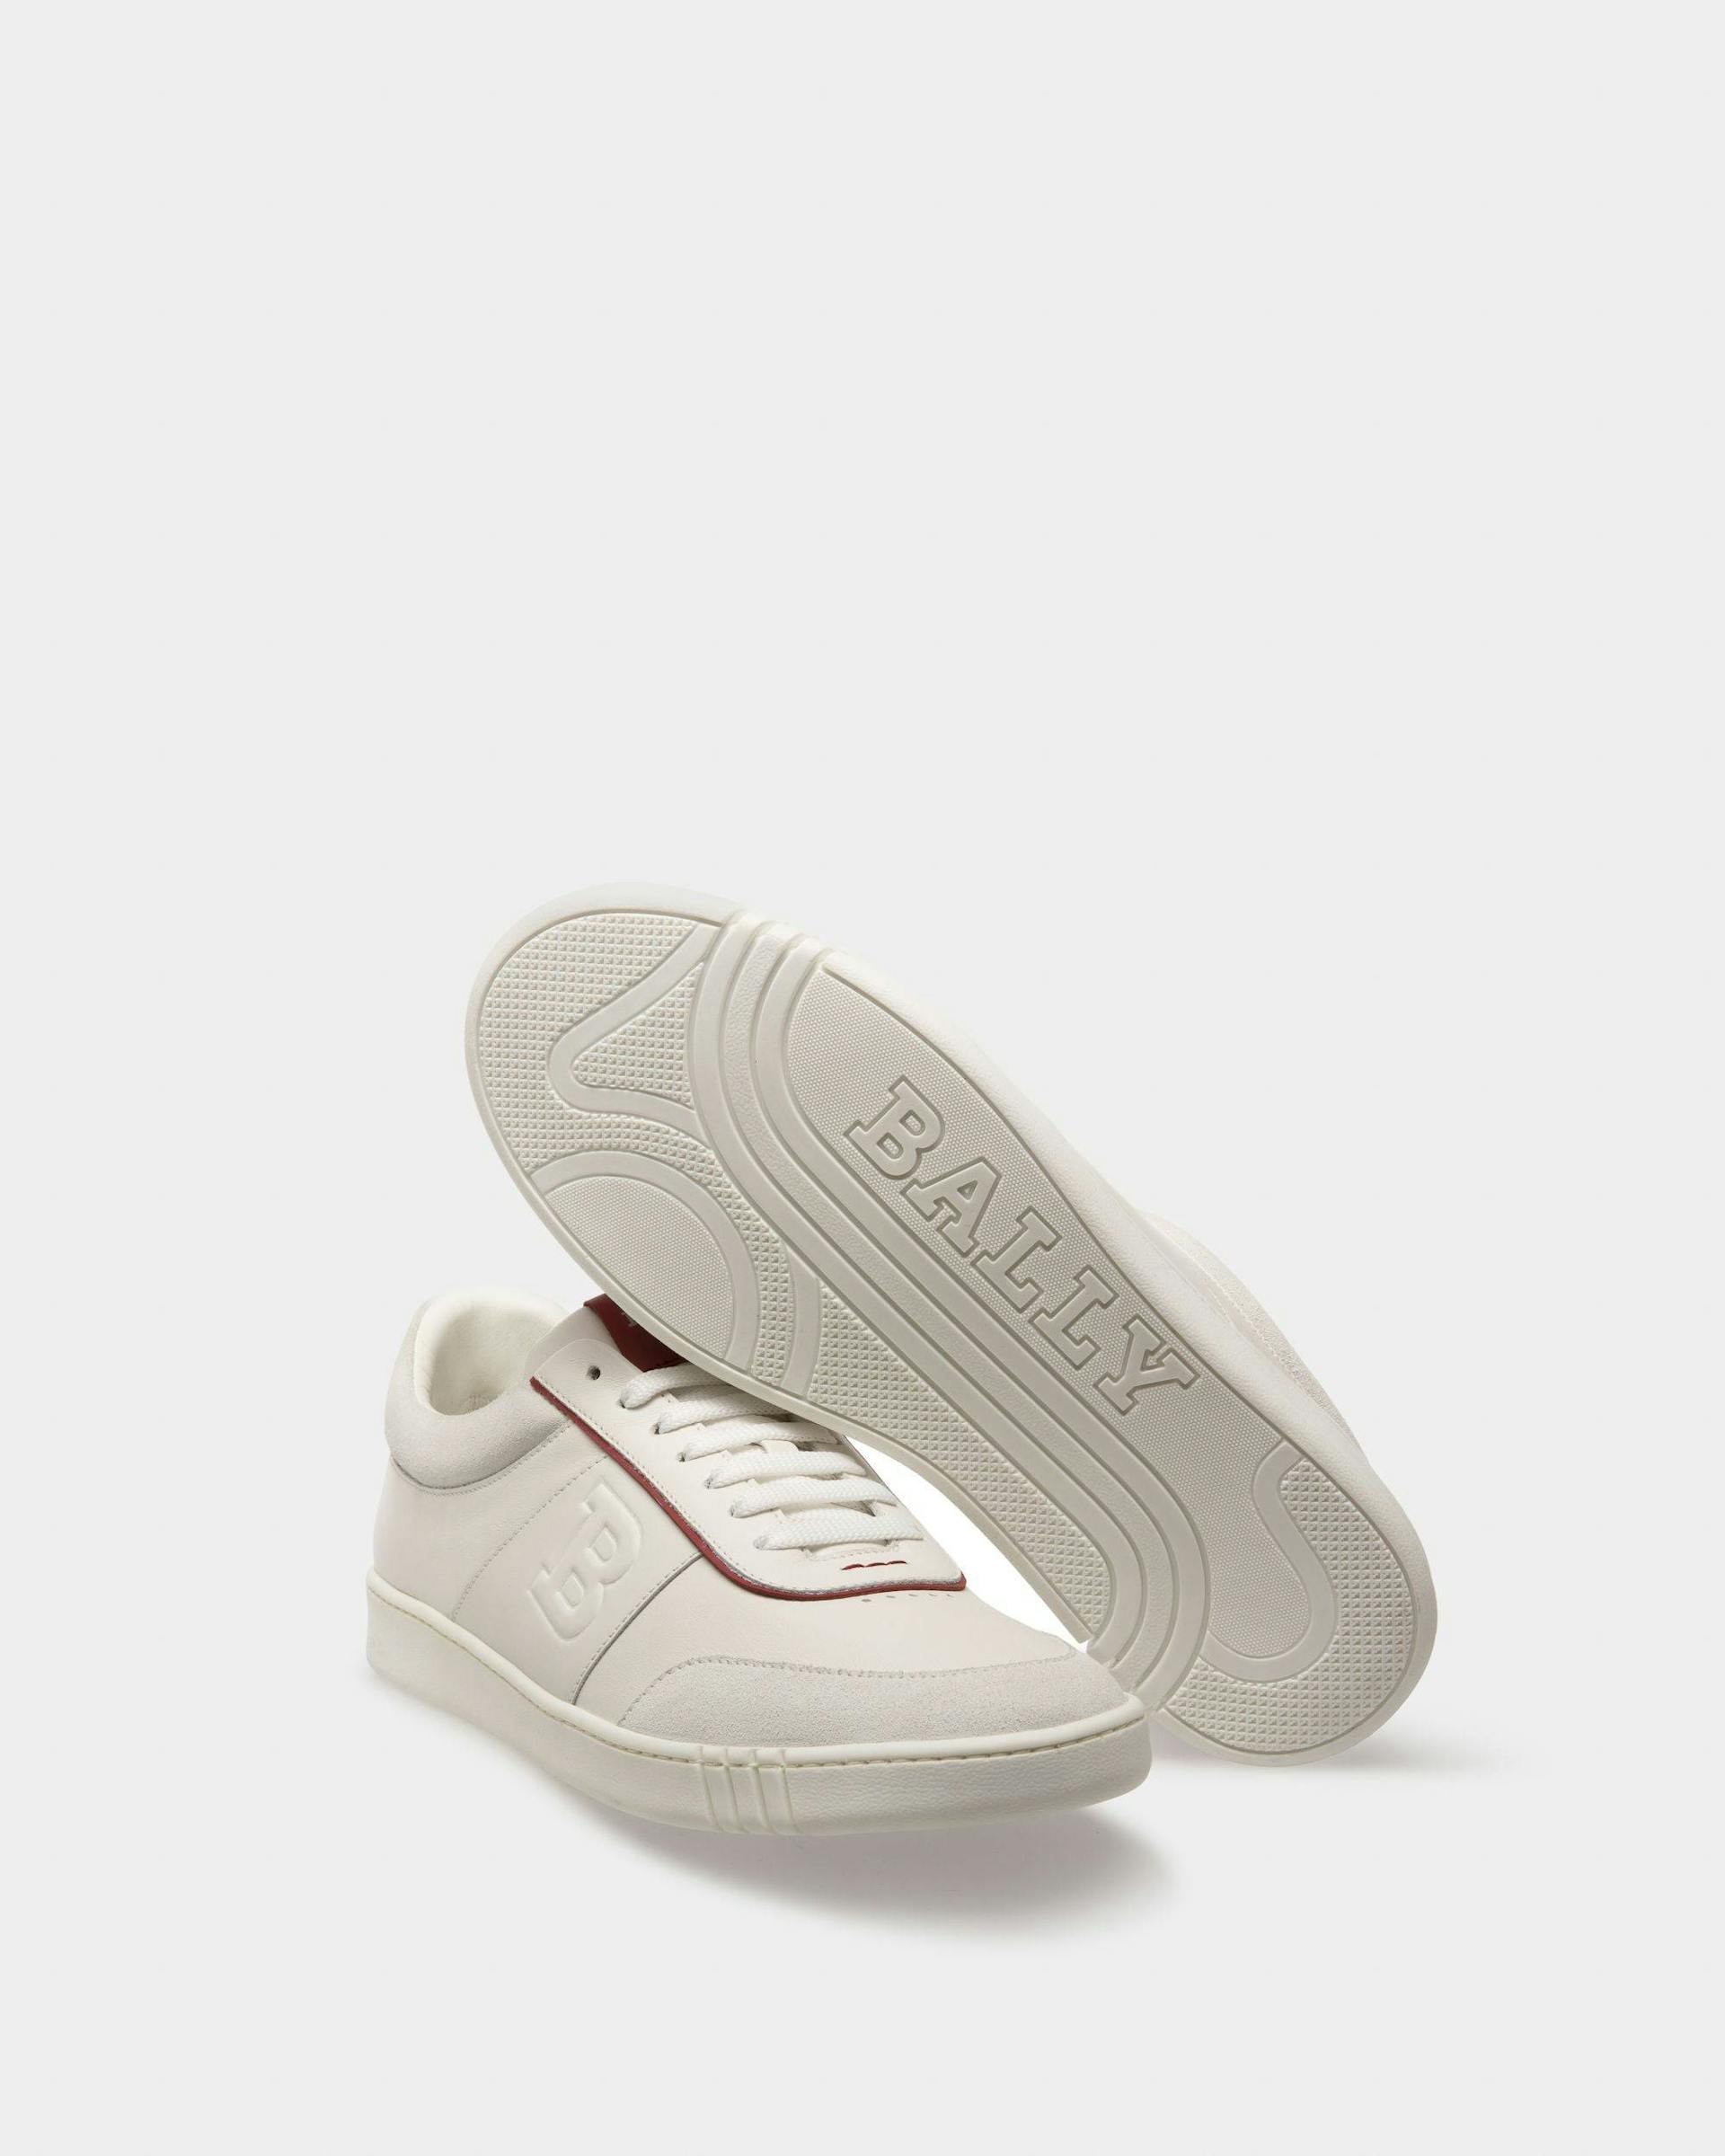 Wallys Sneakers In Pelle E Camoscio Bianco E Rosso - Uomo - Bally - 05